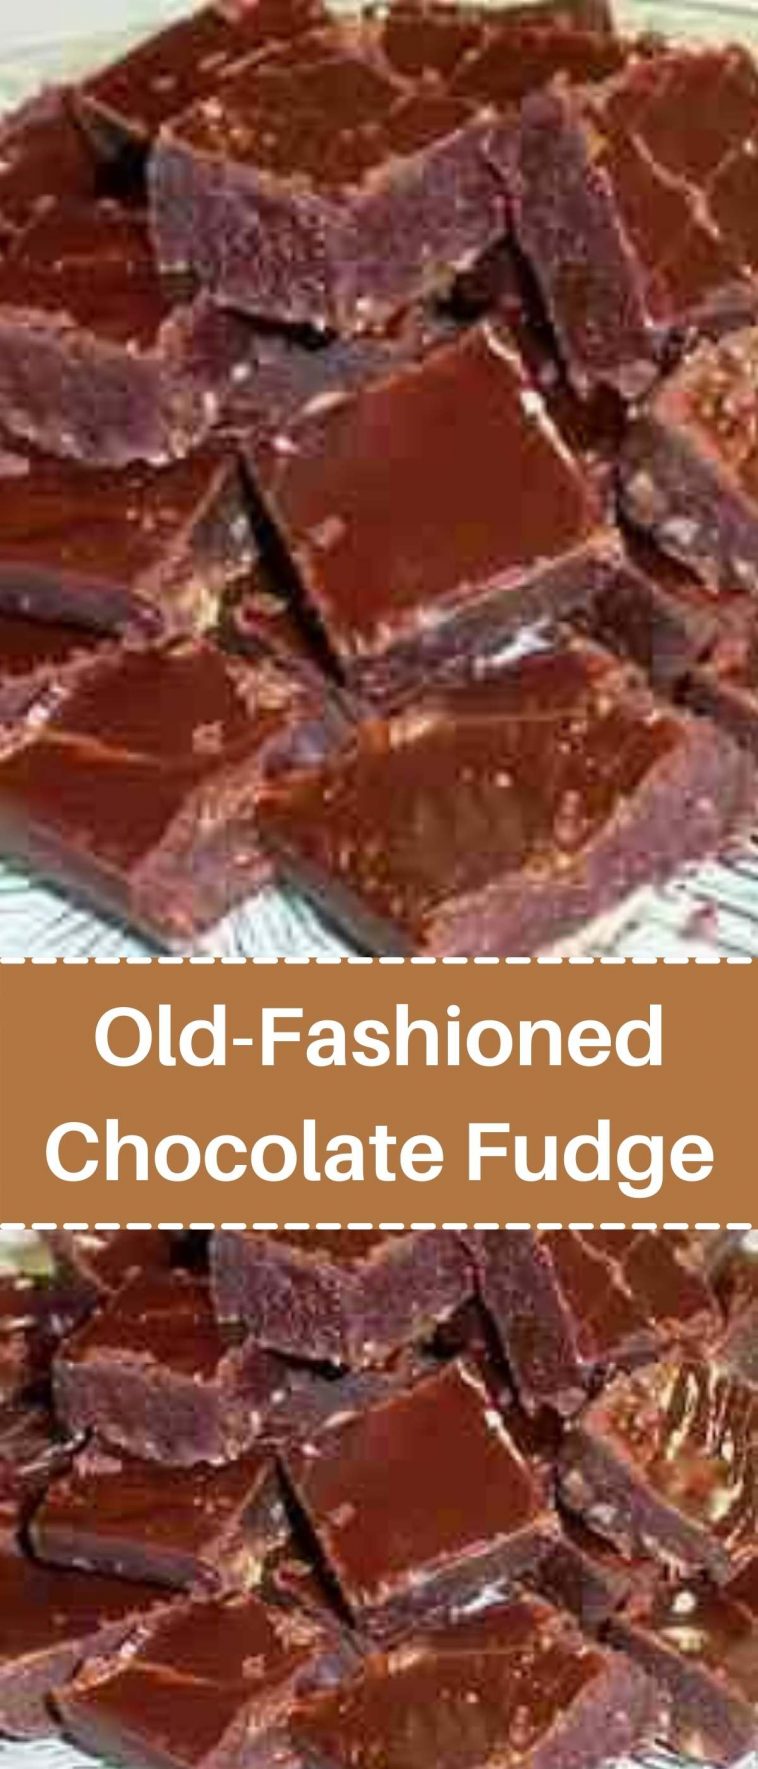 Old-Fashioned Chocolate Fudge